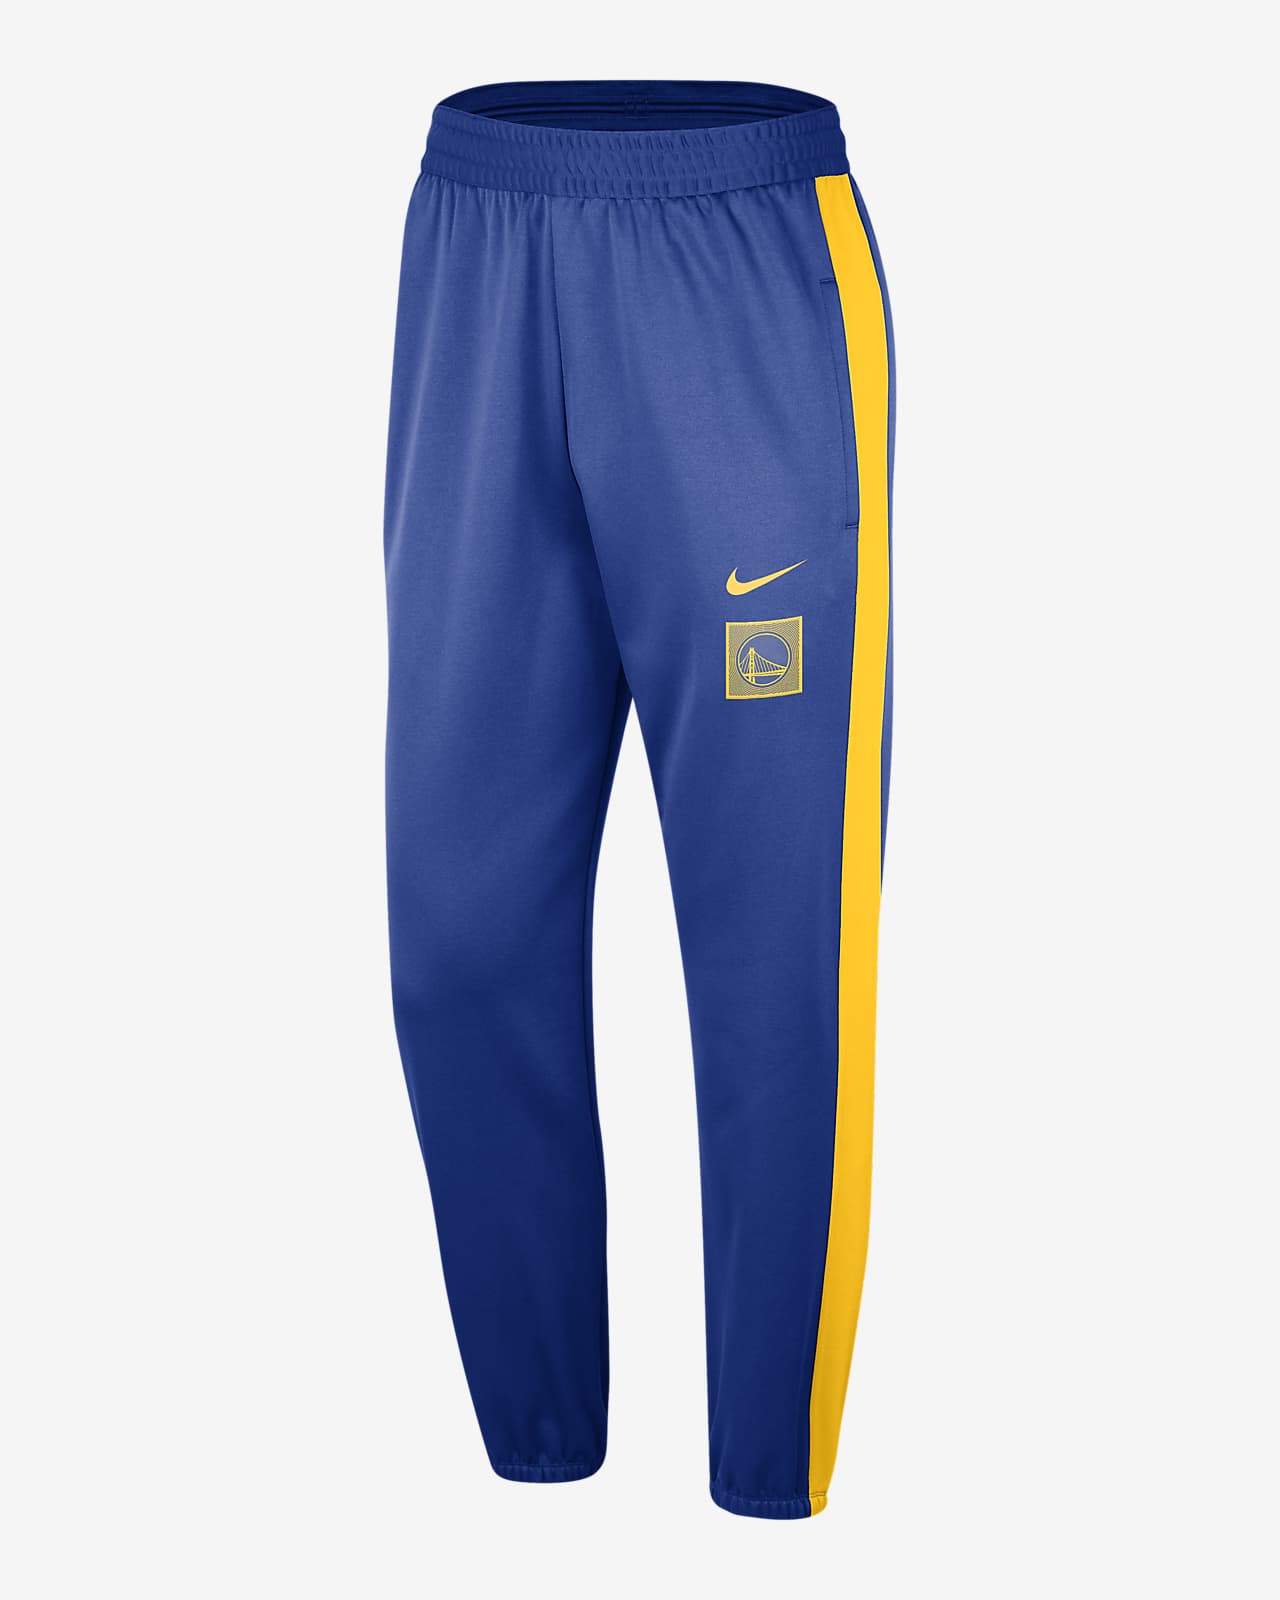 Game Worn NBA Golden State Warriors Adidas Tear Away Warm Up Pants